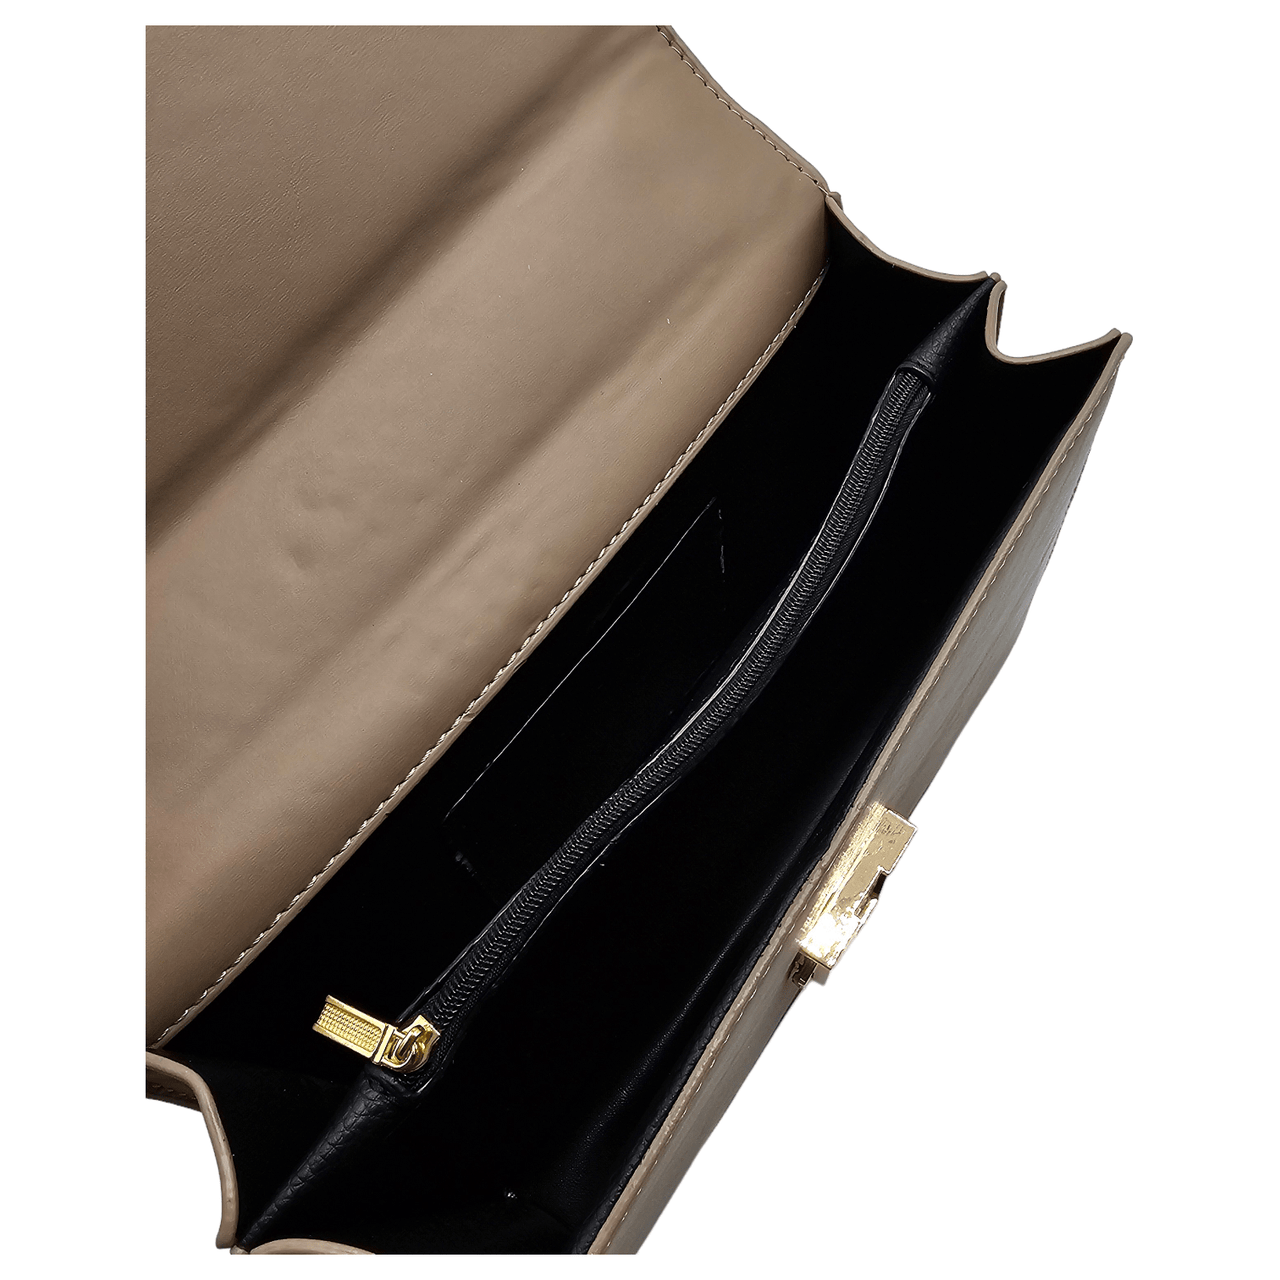 The Bag Couture Handbags, Wallets & Cases TOM FORD Logo Clasp Embossed Shoulder Bag Beige